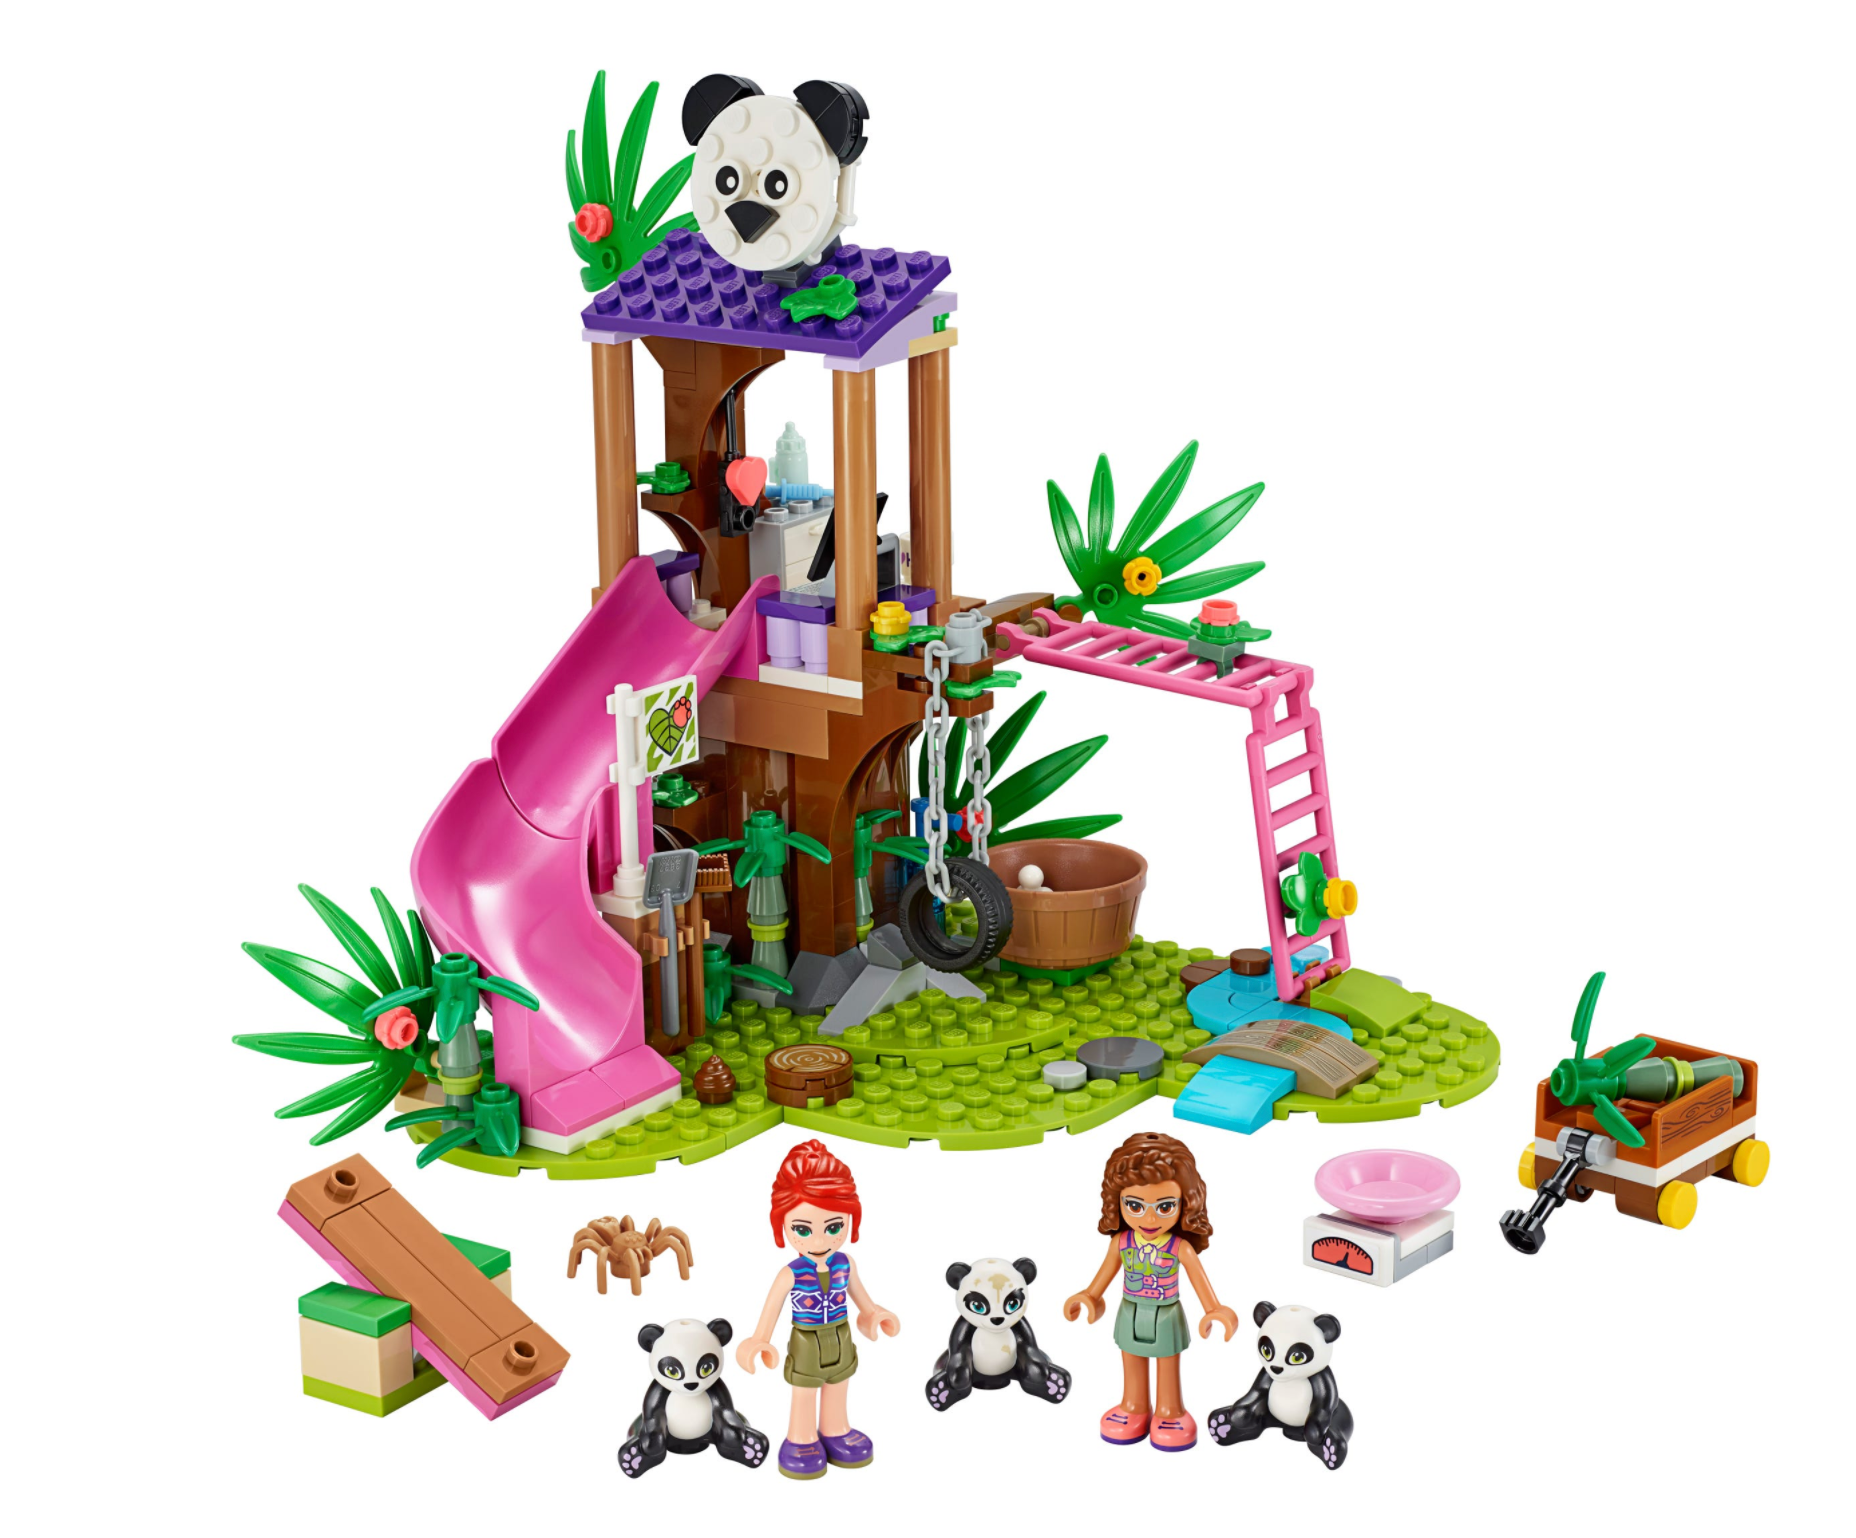 LEGO: Friends - Panda Jungle Tree House